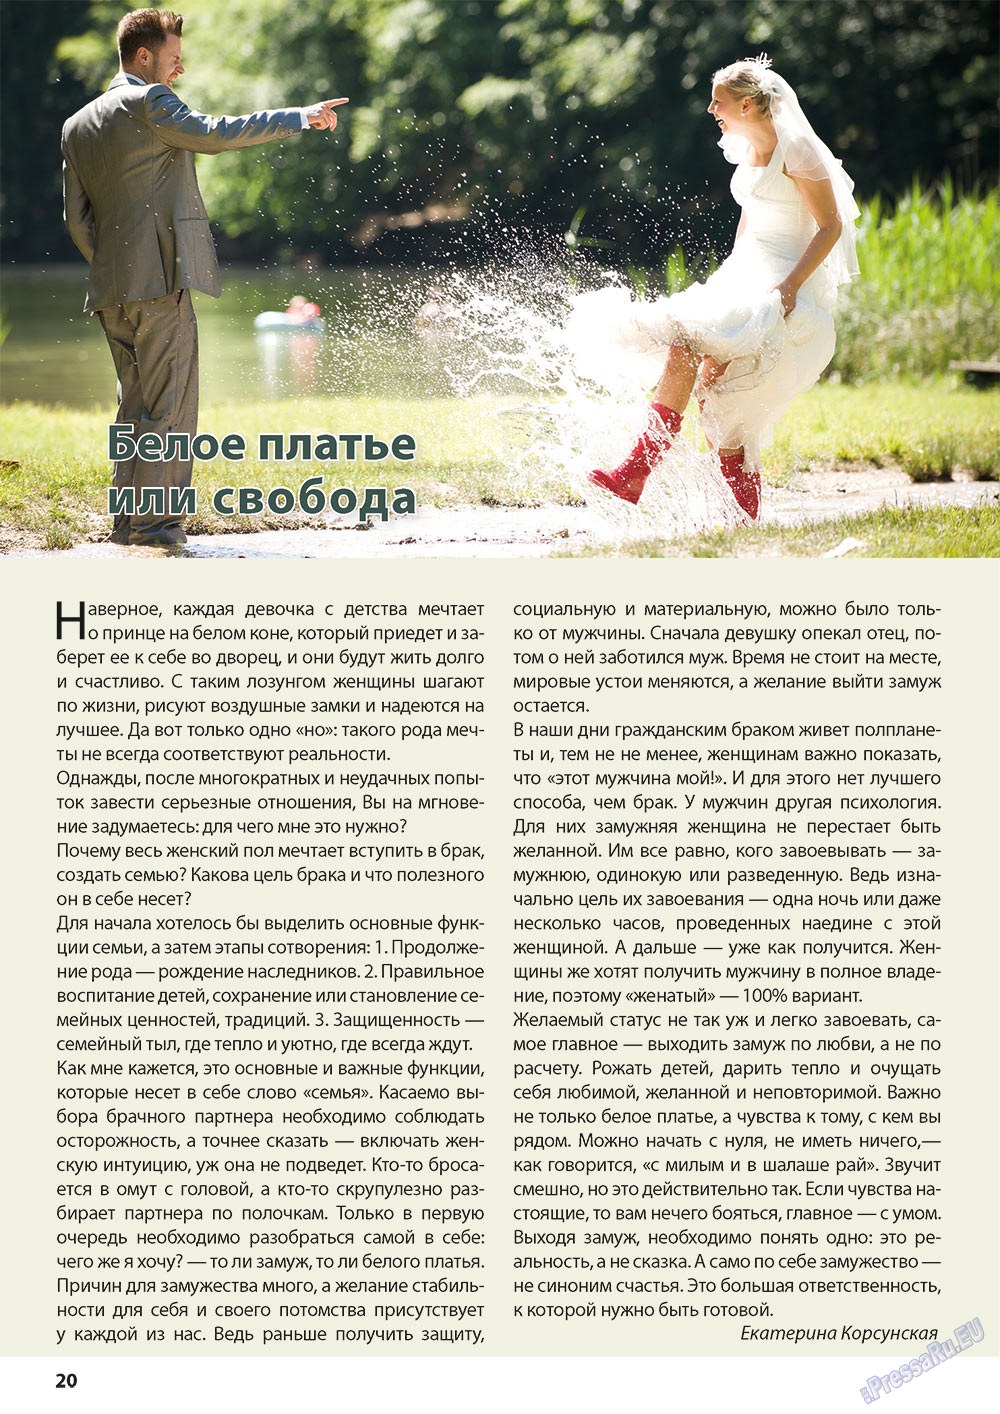 Wadim, журнал. 2012 №11 стр.20